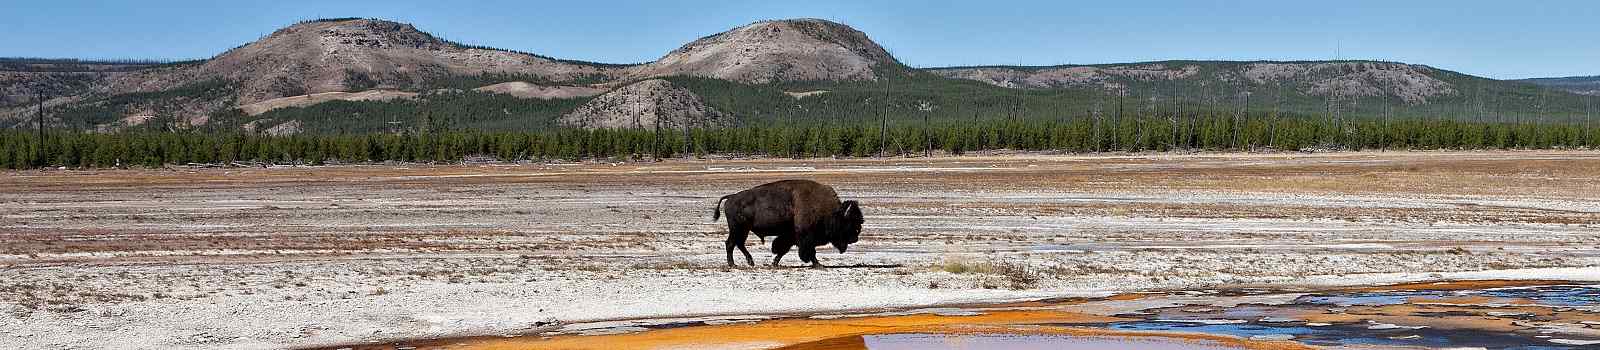 COWBOYS-INDIANER -Wyoming Yellowstone Emerald Pool mit Bueffel 85799053